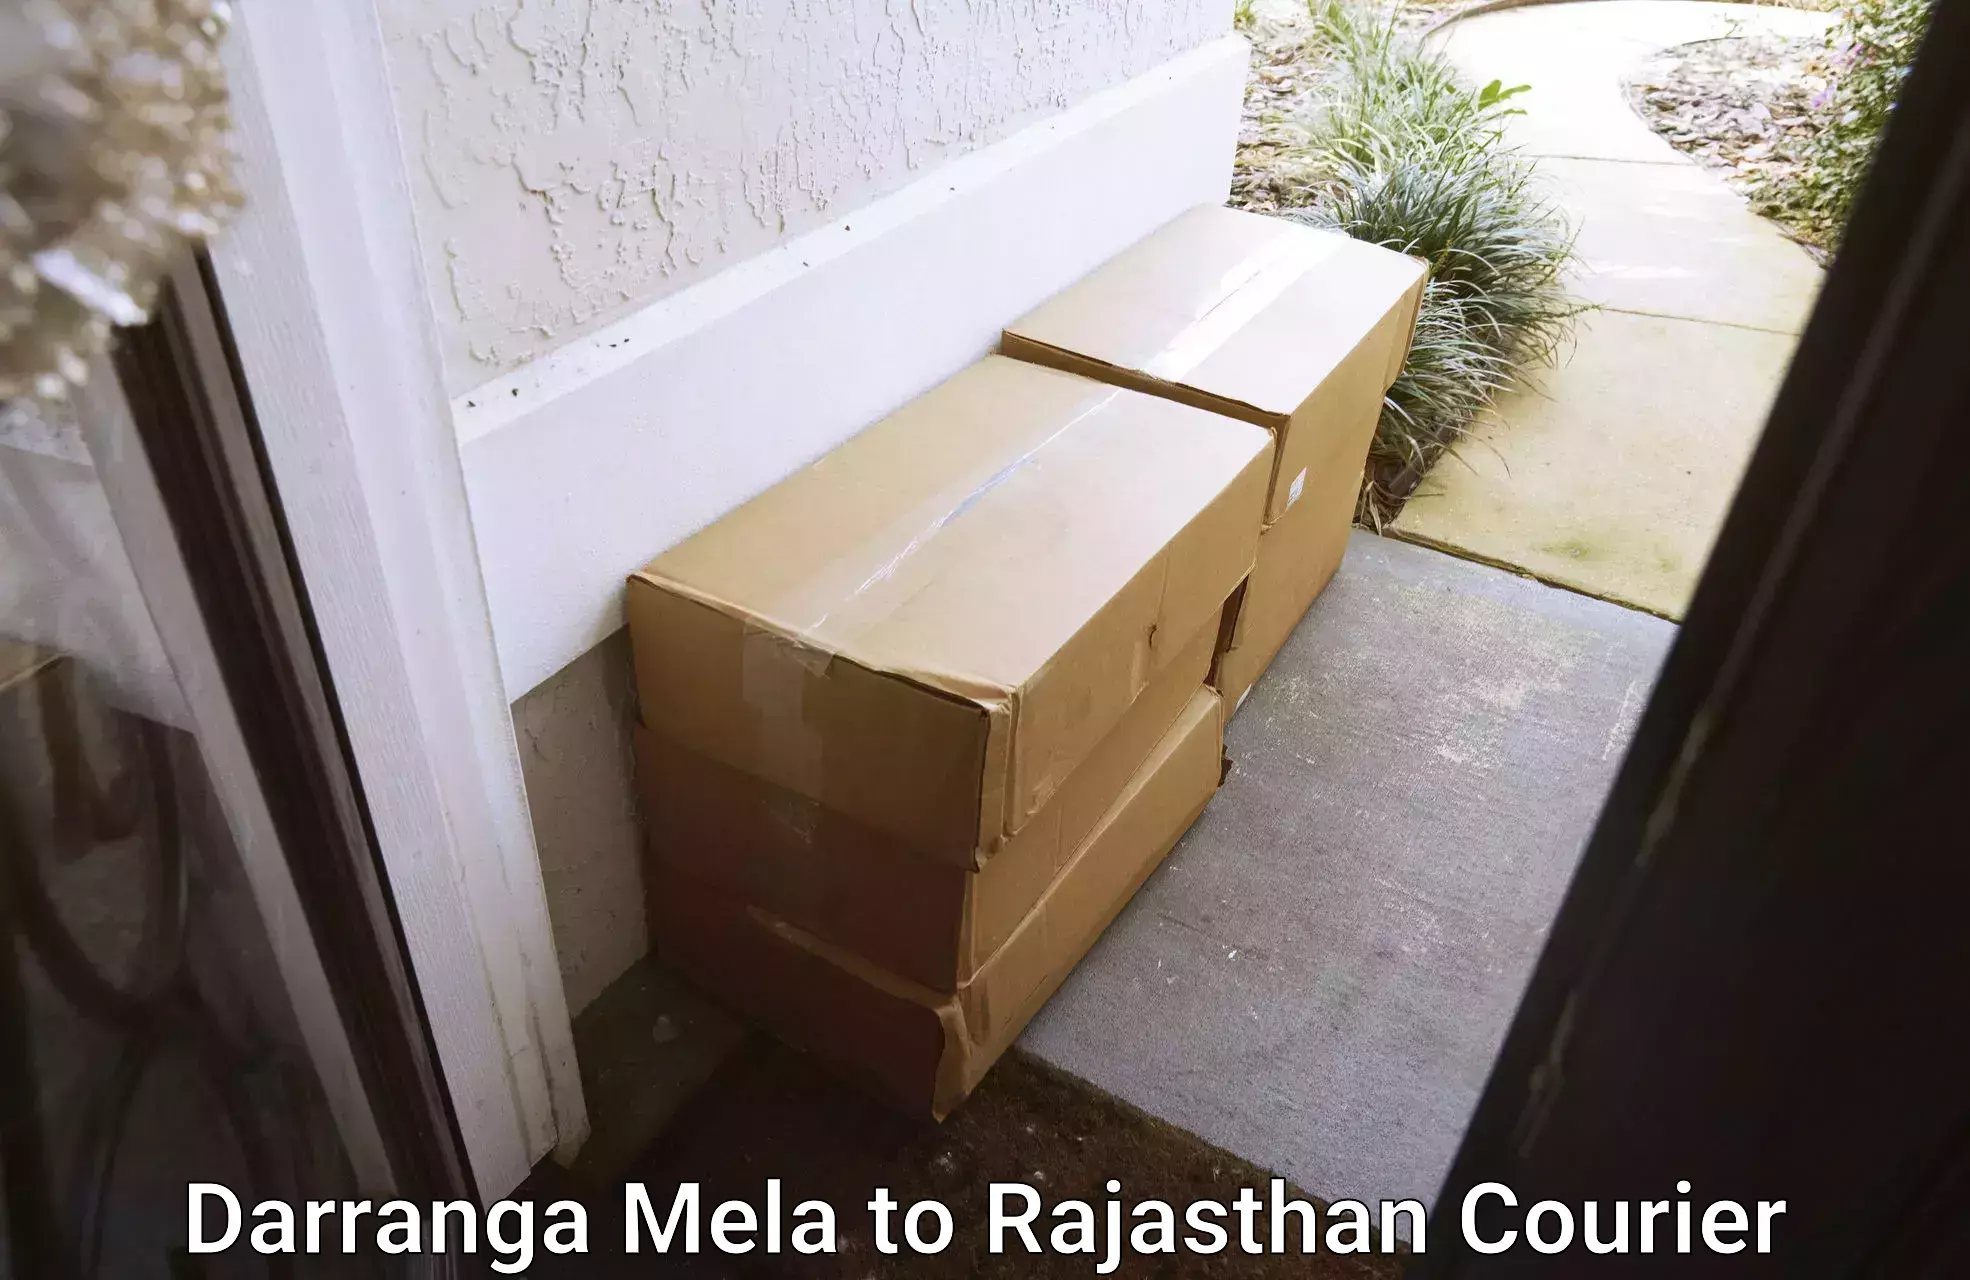 Same-day delivery solutions Darranga Mela to Barmer